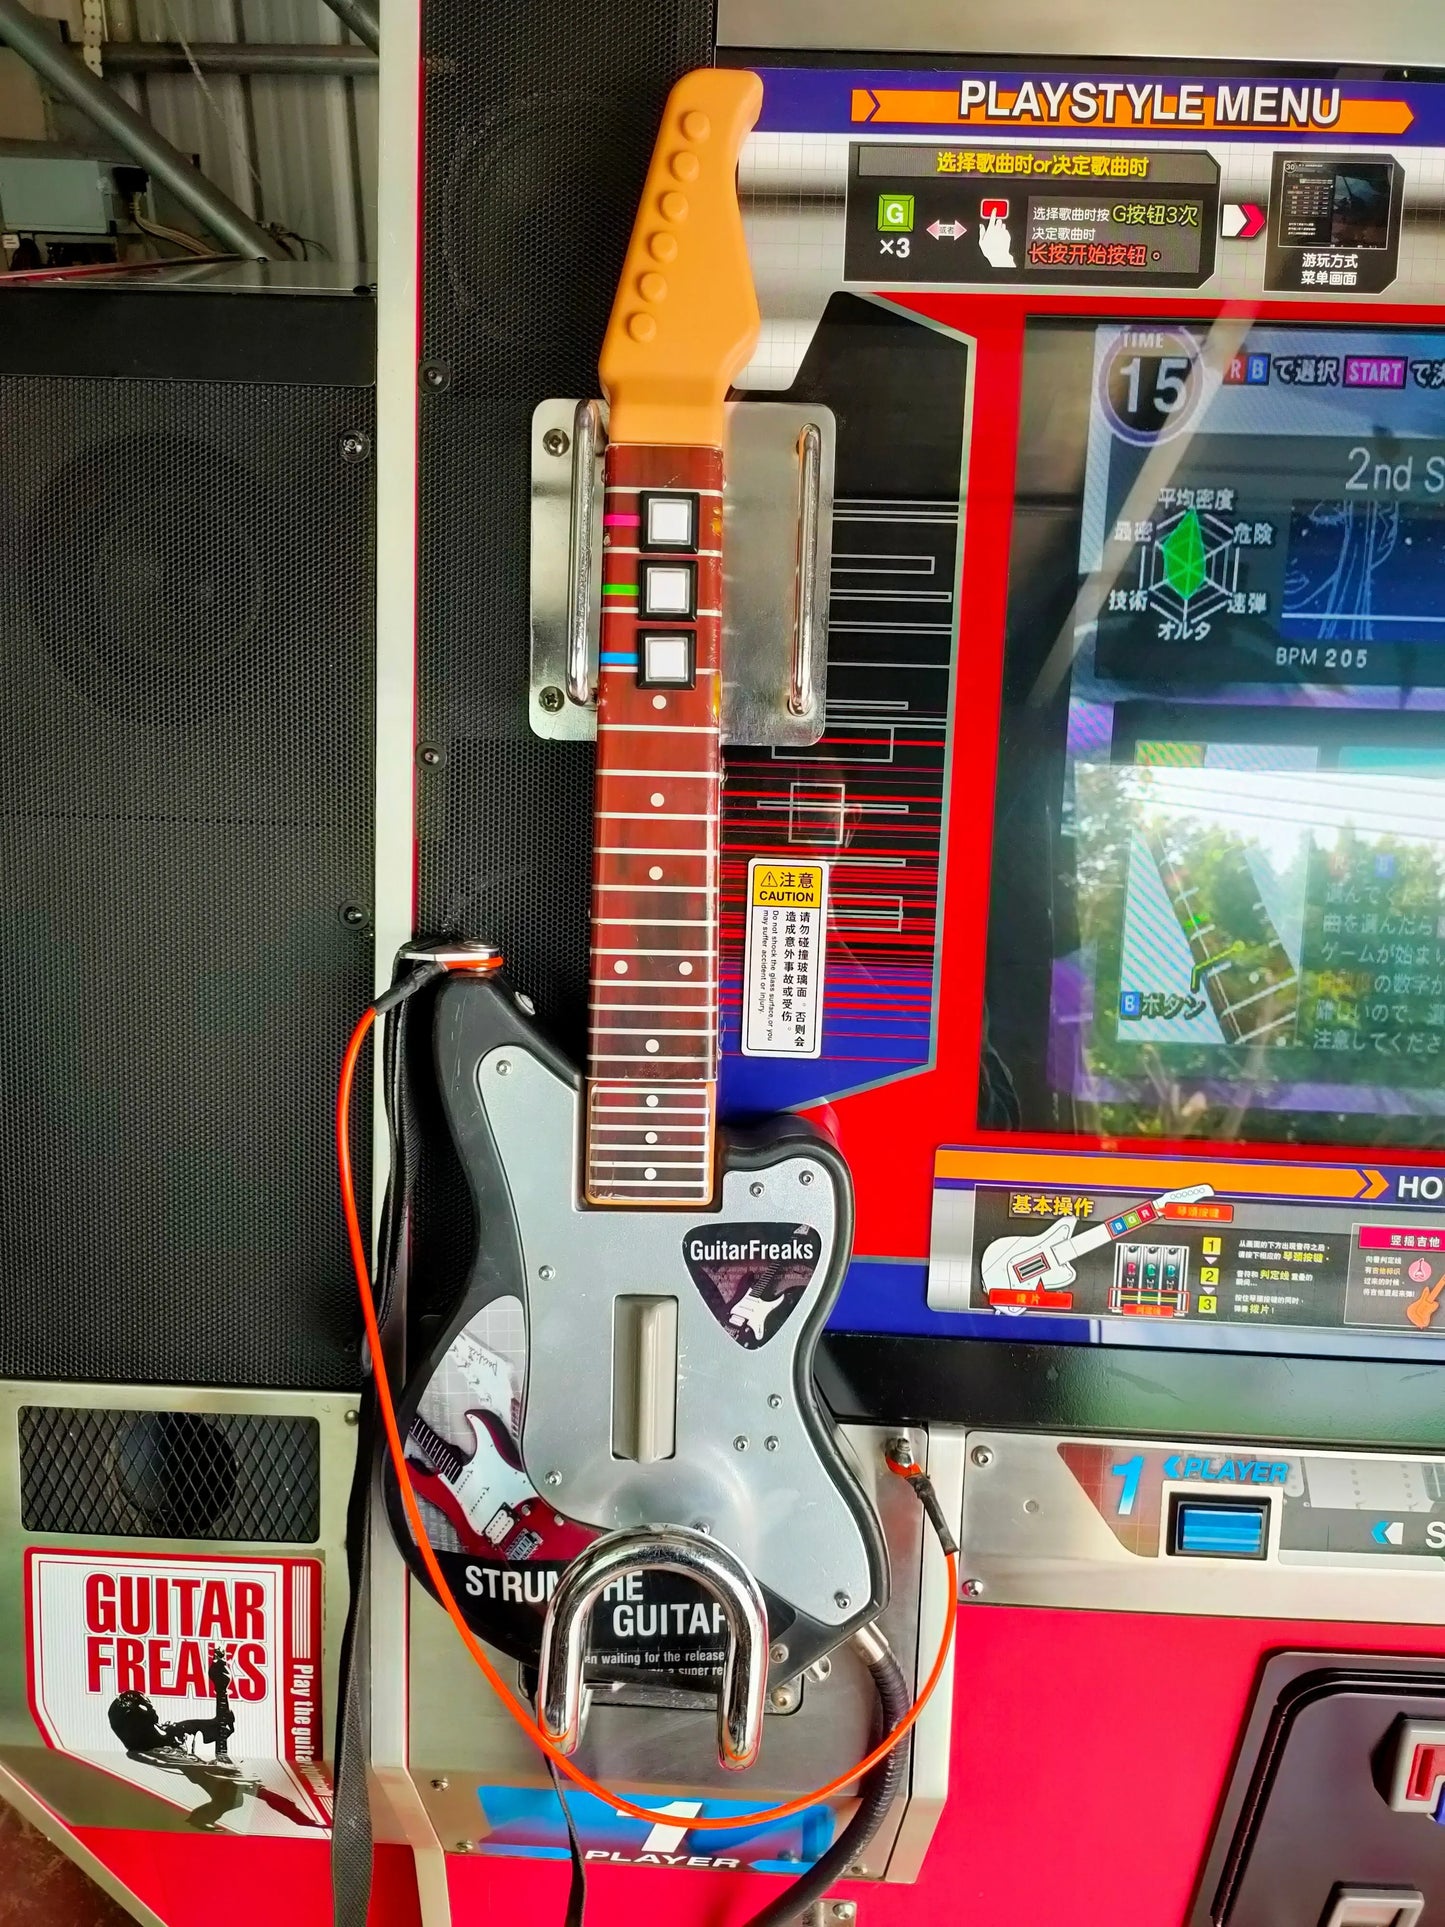 Guitar-Freaks-V-7-Rhythm-Games-Retro-KONAMI-Freaks-V7-Guitar-music-Arcade-Game-machine-Tomy-Arcade